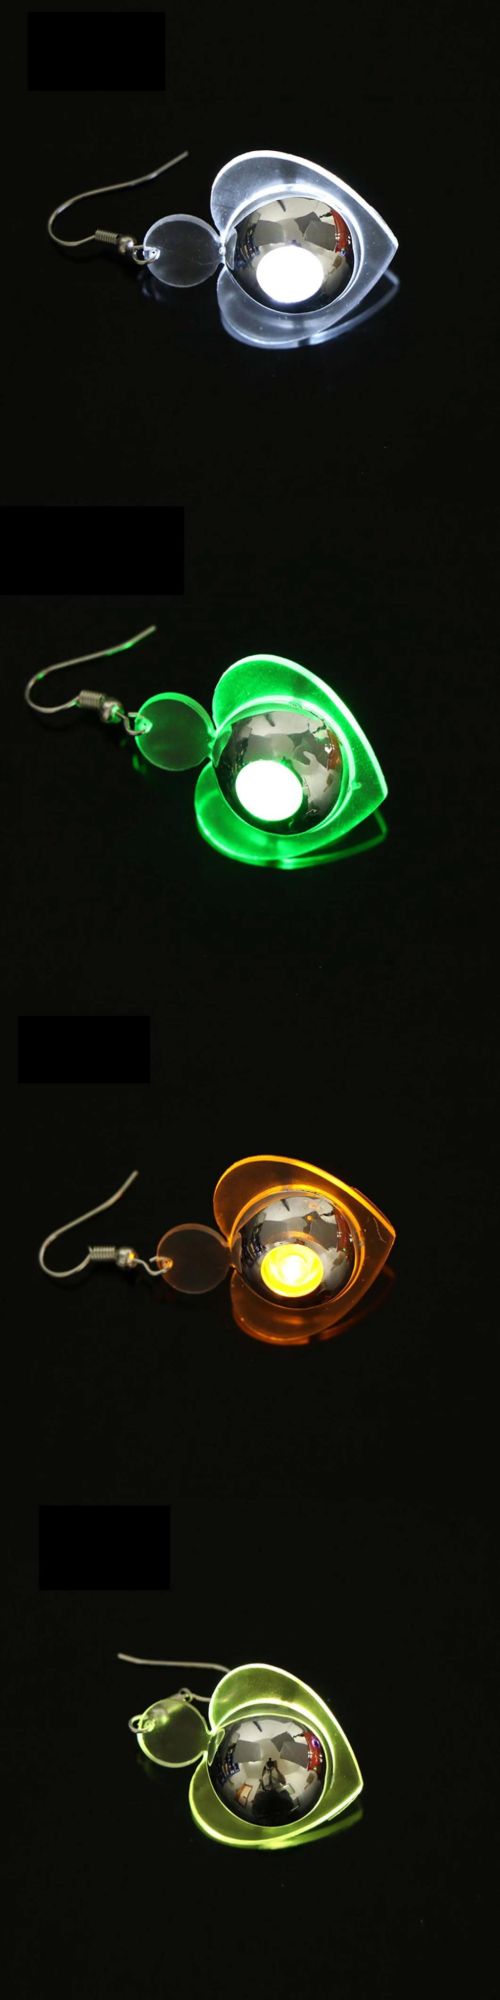 LED Light up Earrings Flashing LED Earrings Heart/Circutal/Butterfly Light